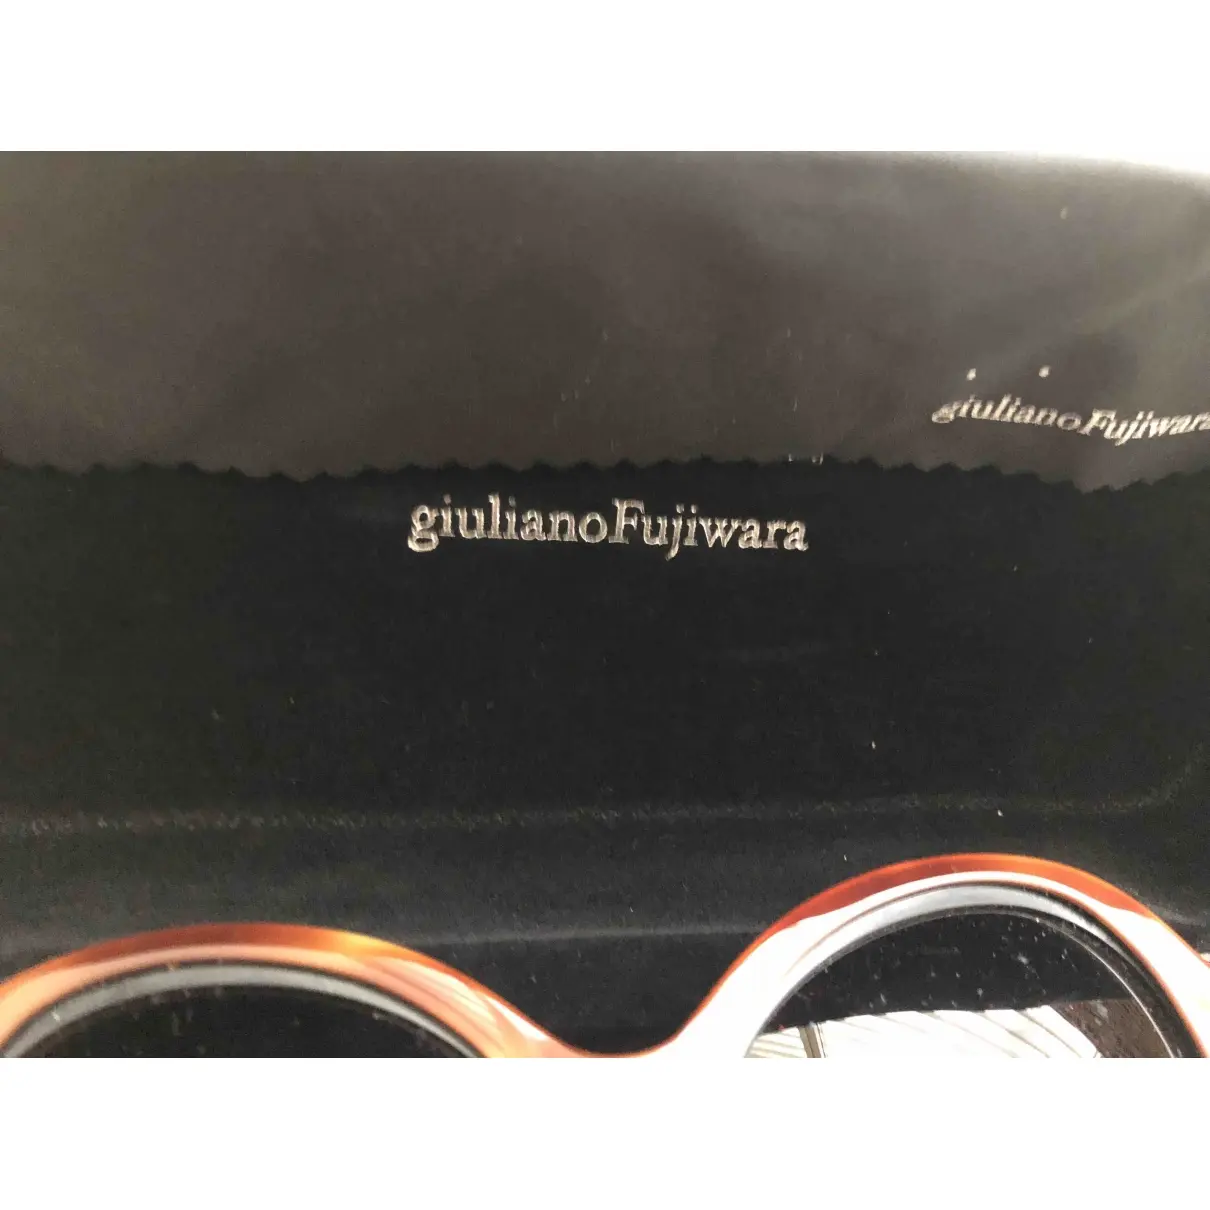 Buy Giuliano Fujiwara Oversized sunglasses online